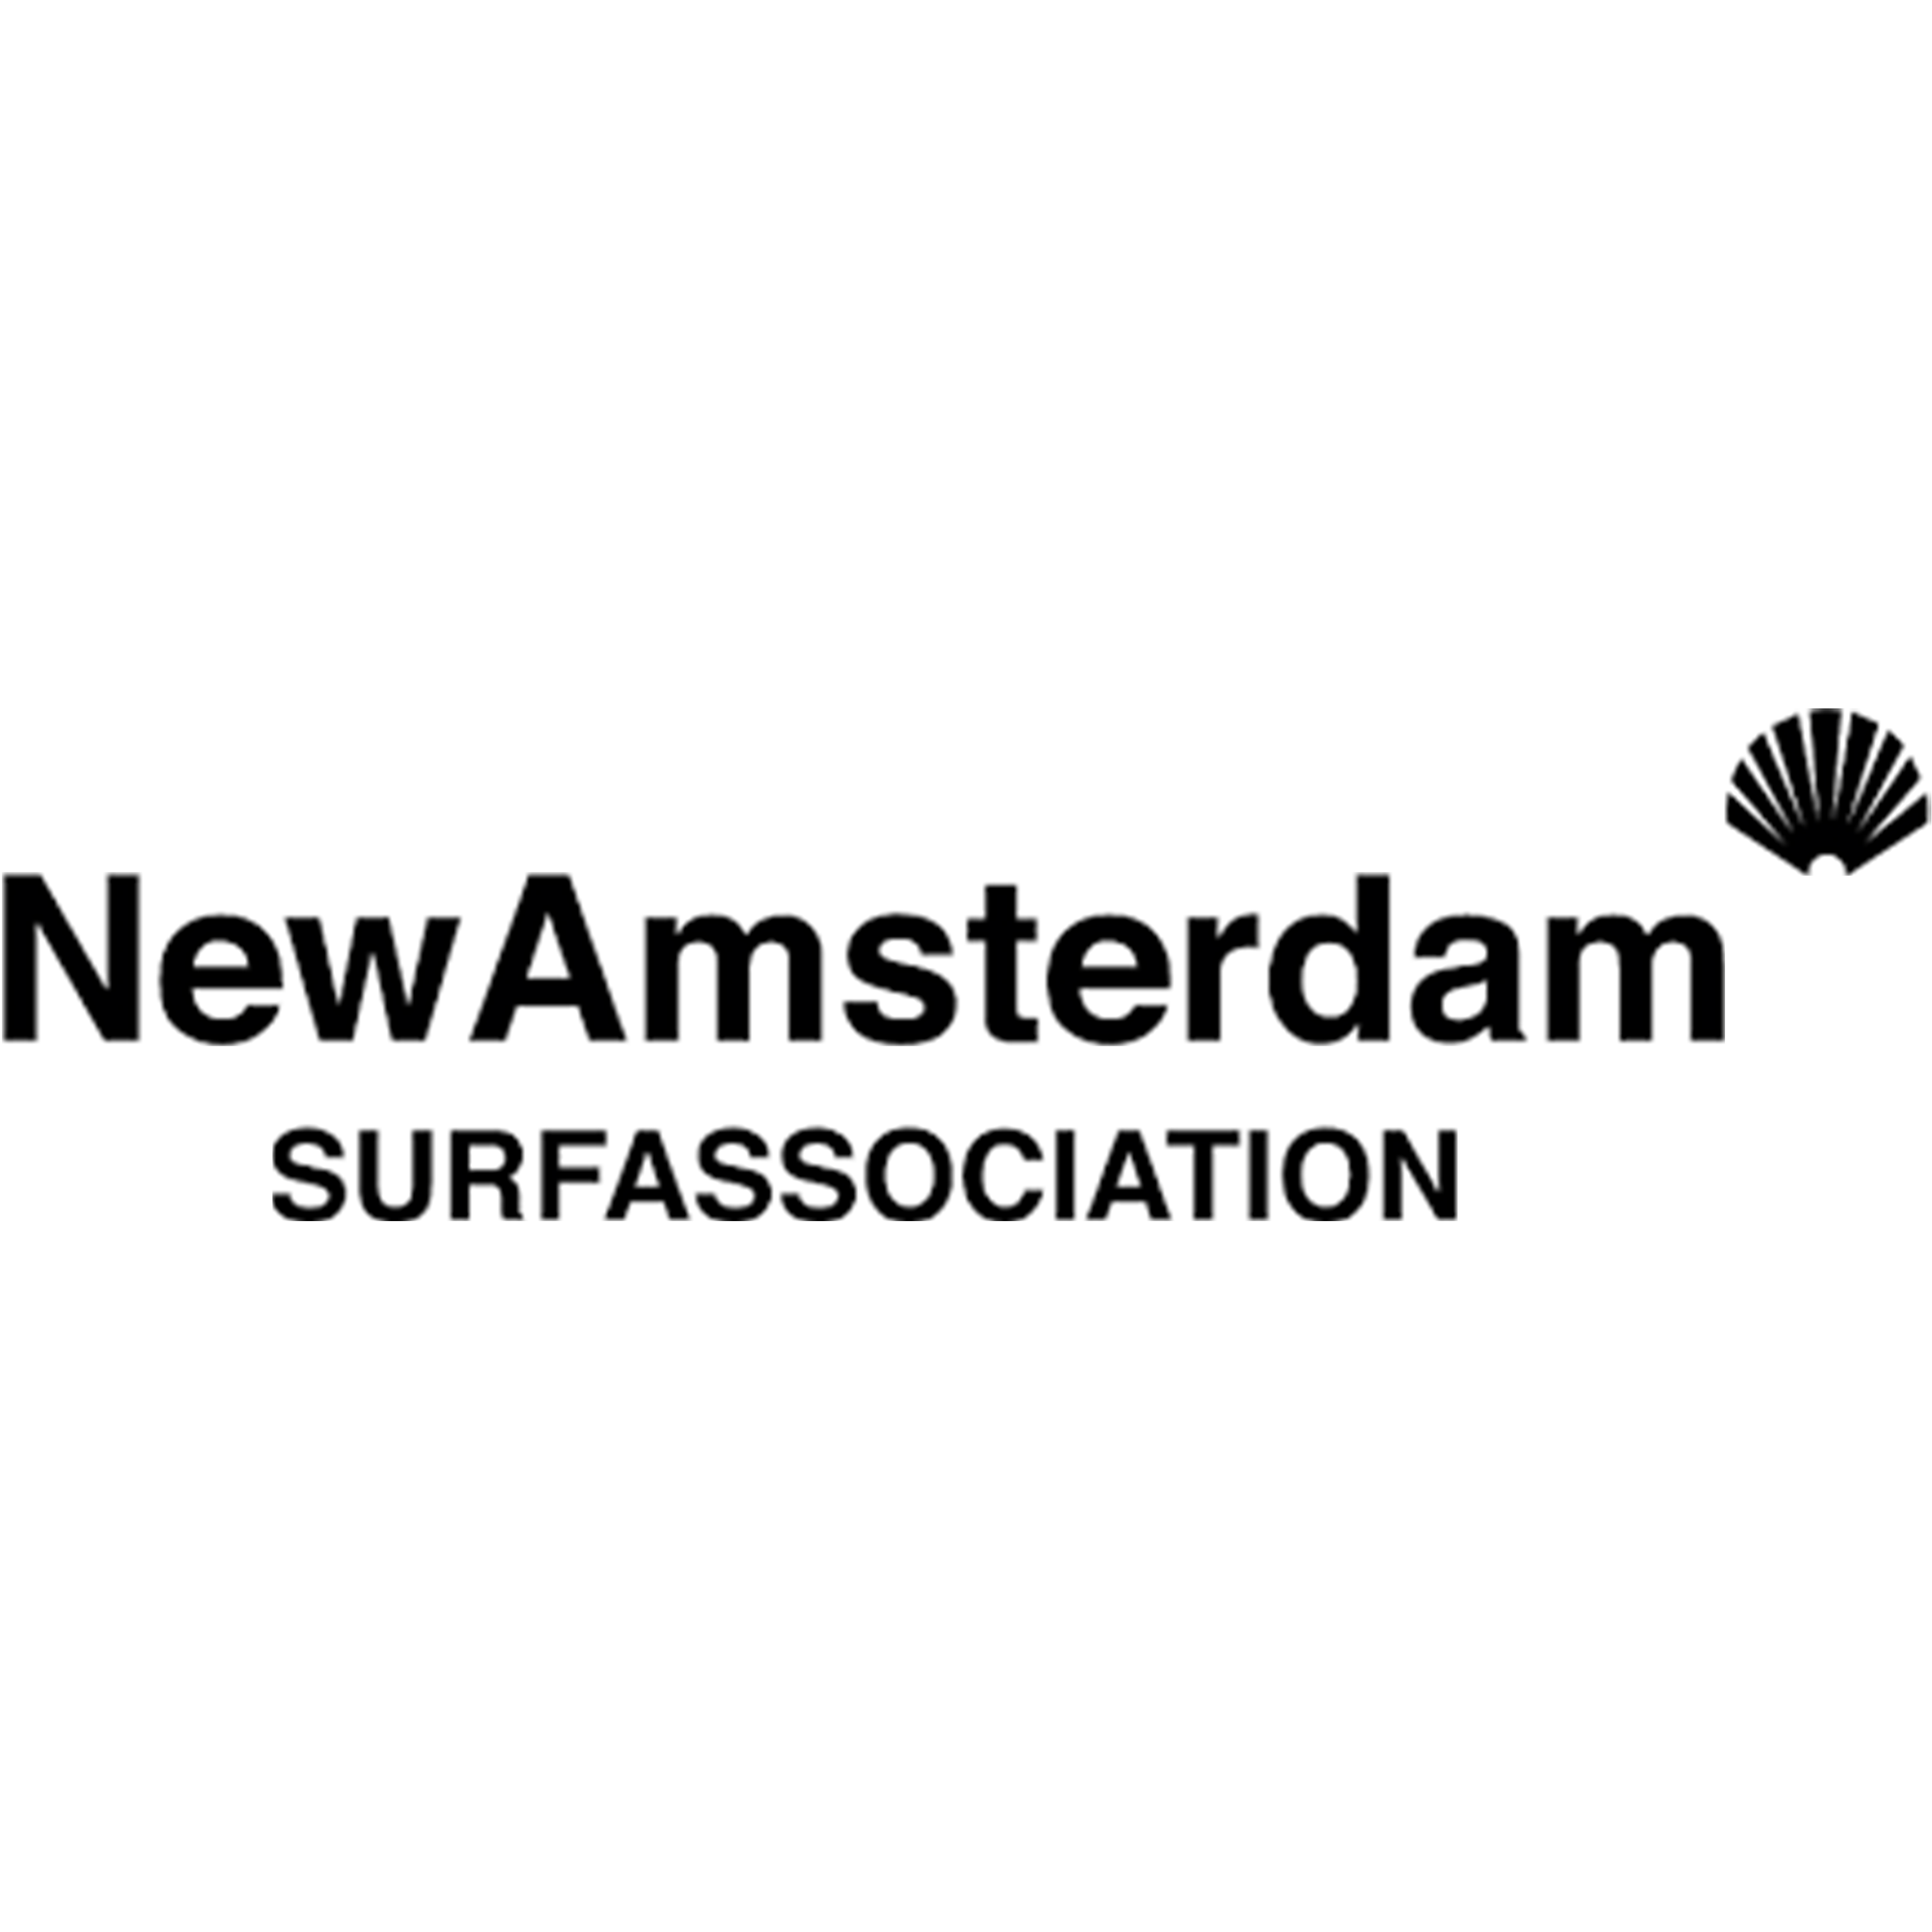 NEW AMSTERDAM SURFASSOCIATION